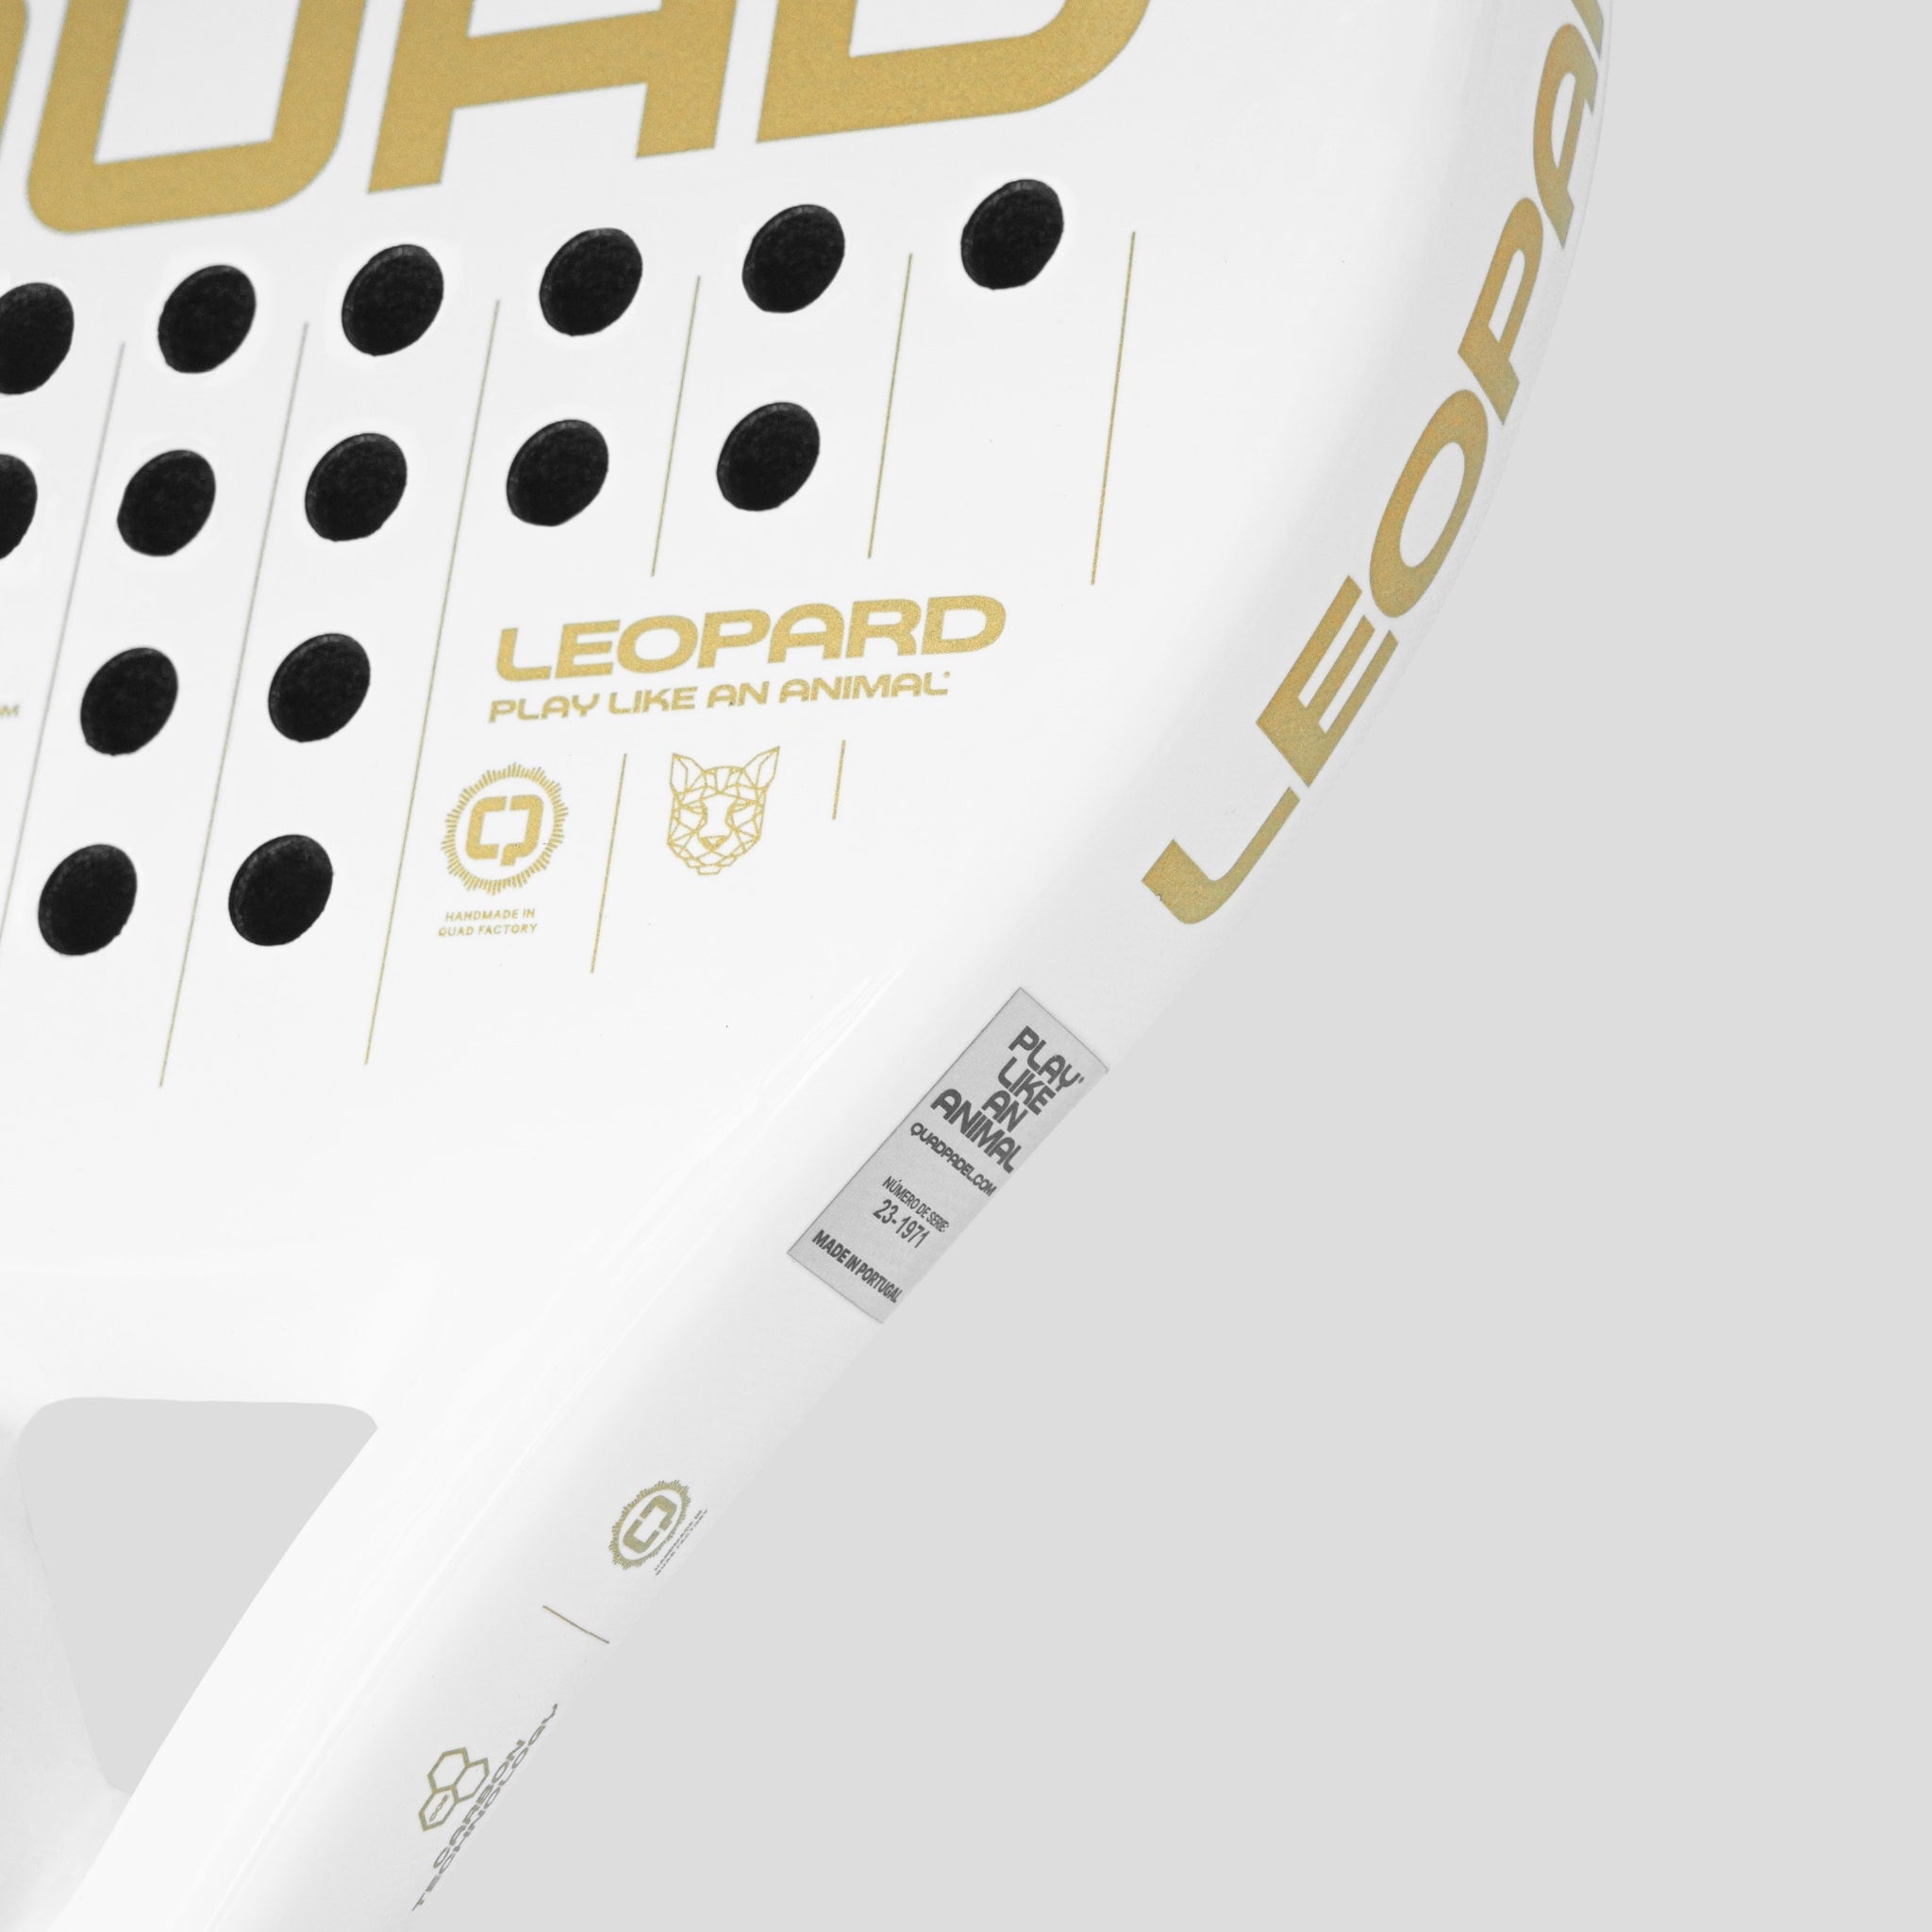 QUAD Leopard padel racket side view